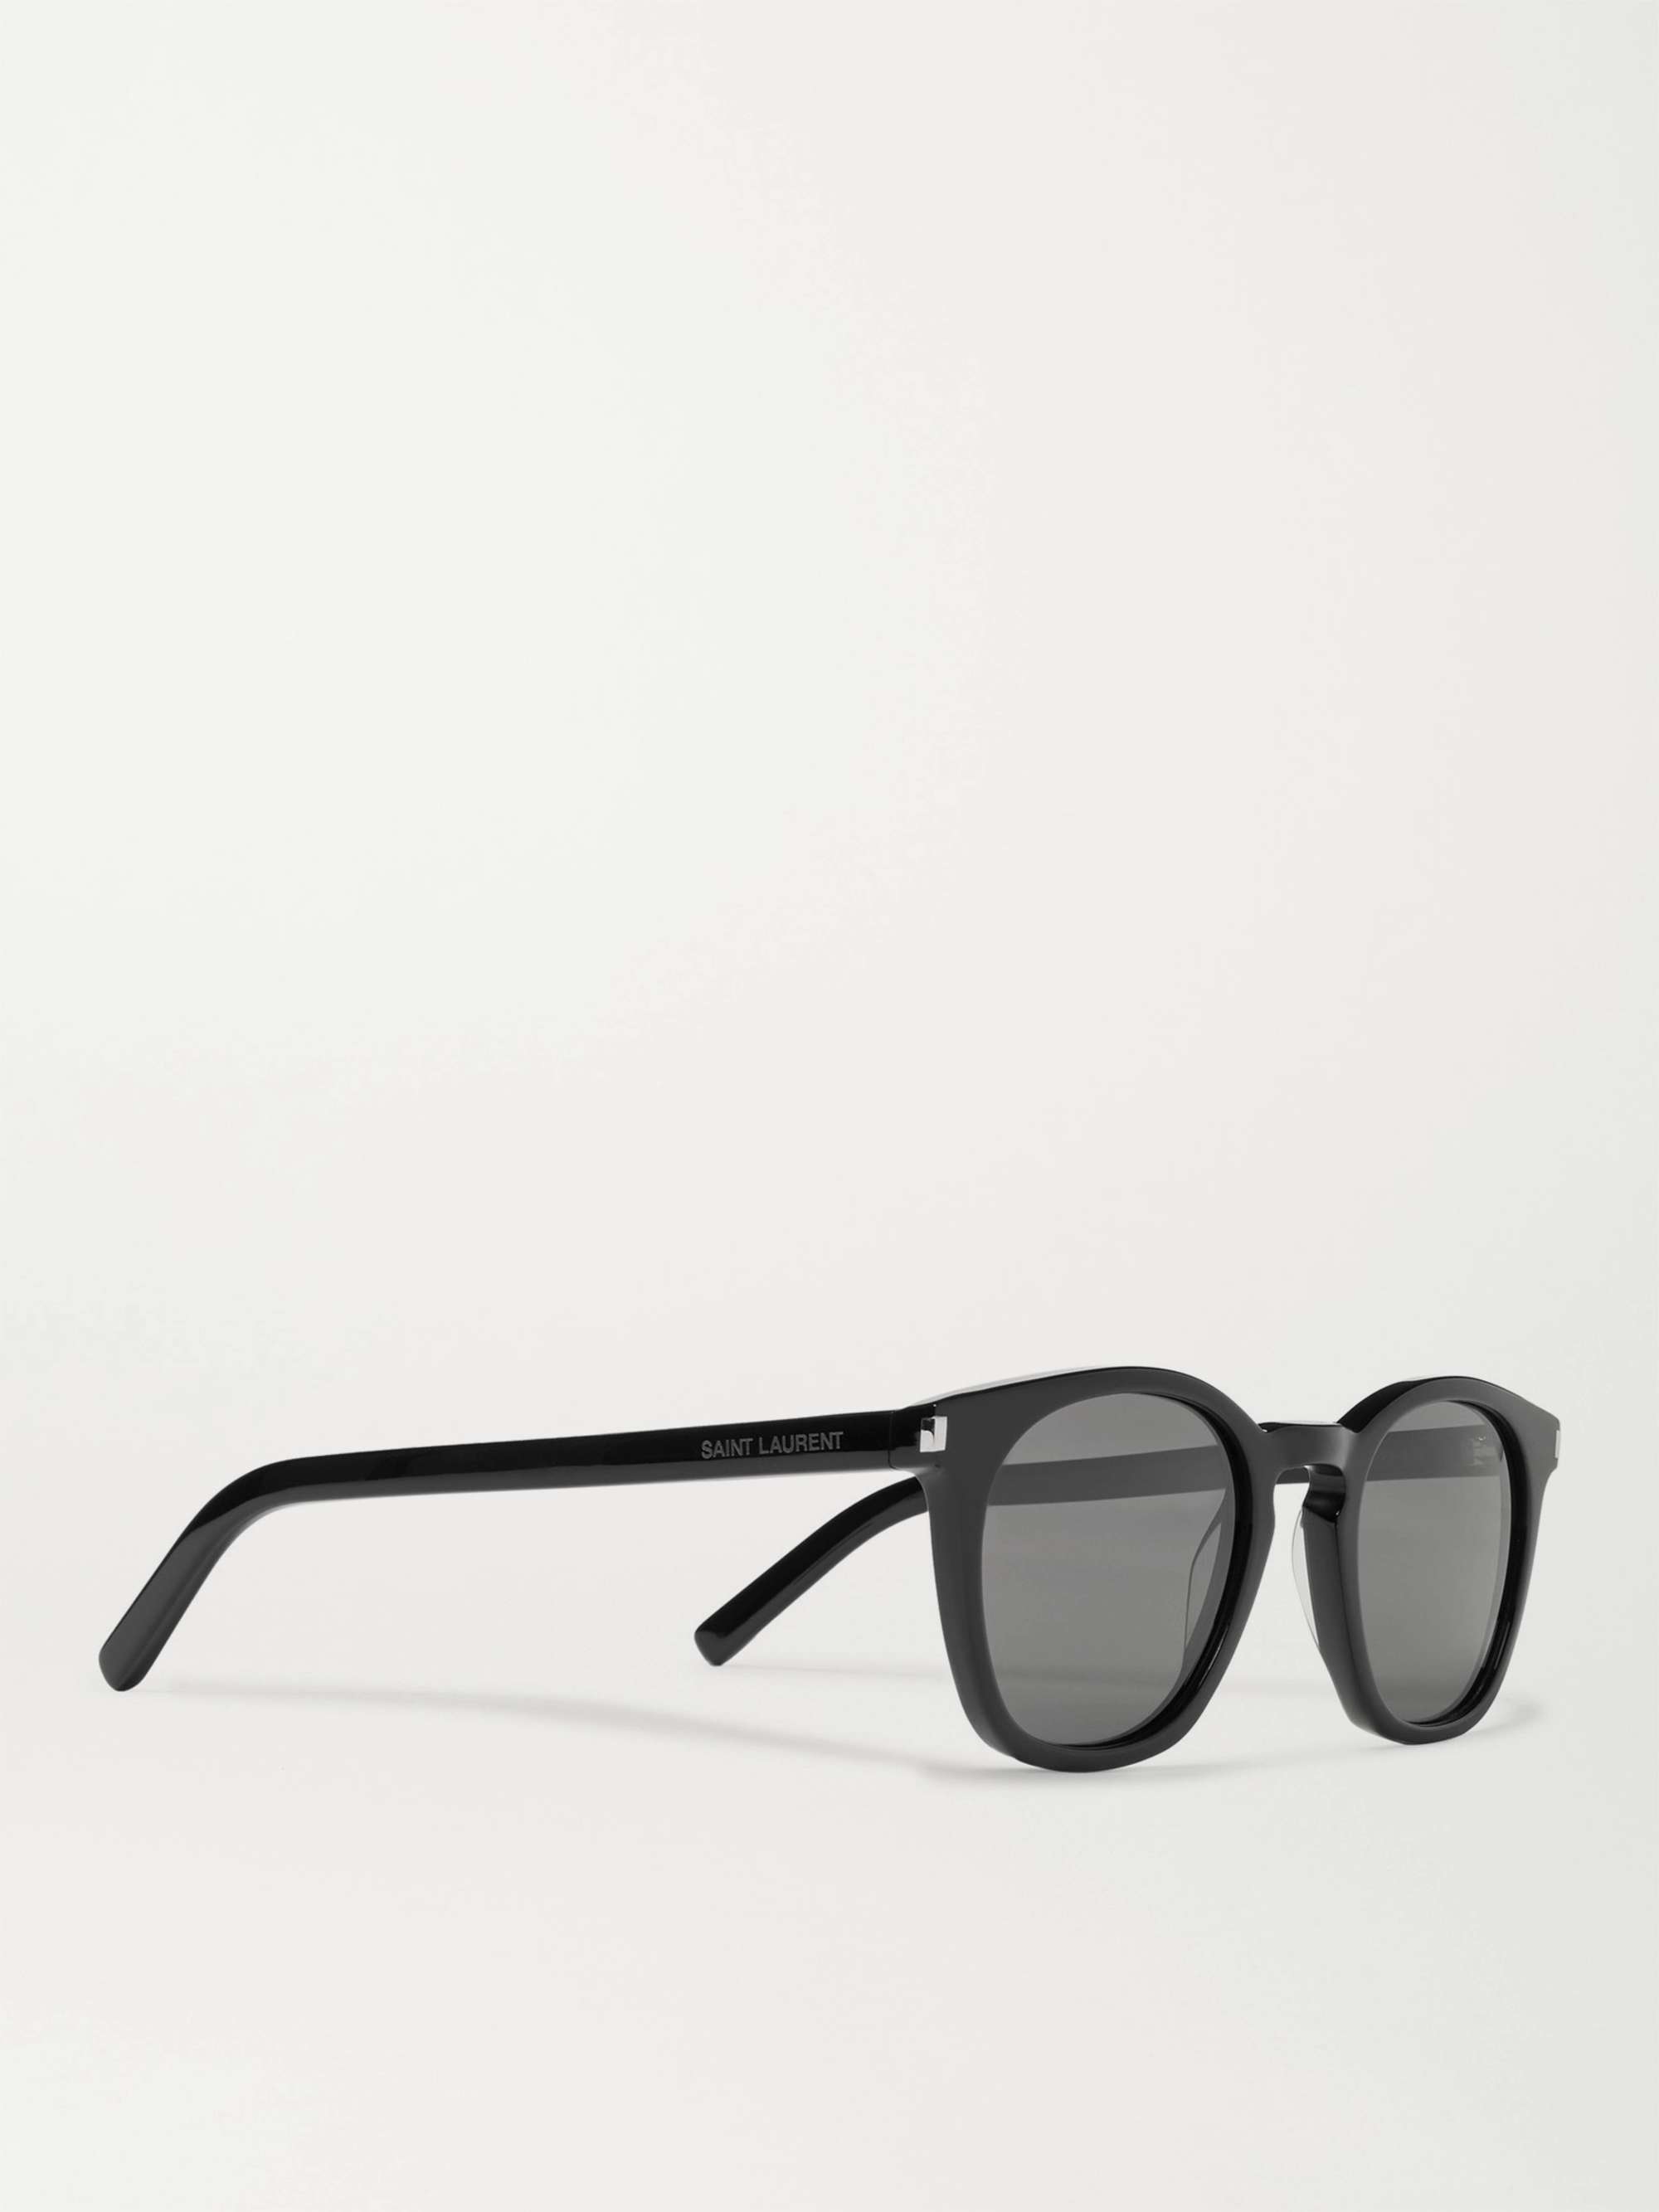 SAINT LAURENT EYEWEAR Round-Frame Acetate Sunglasses